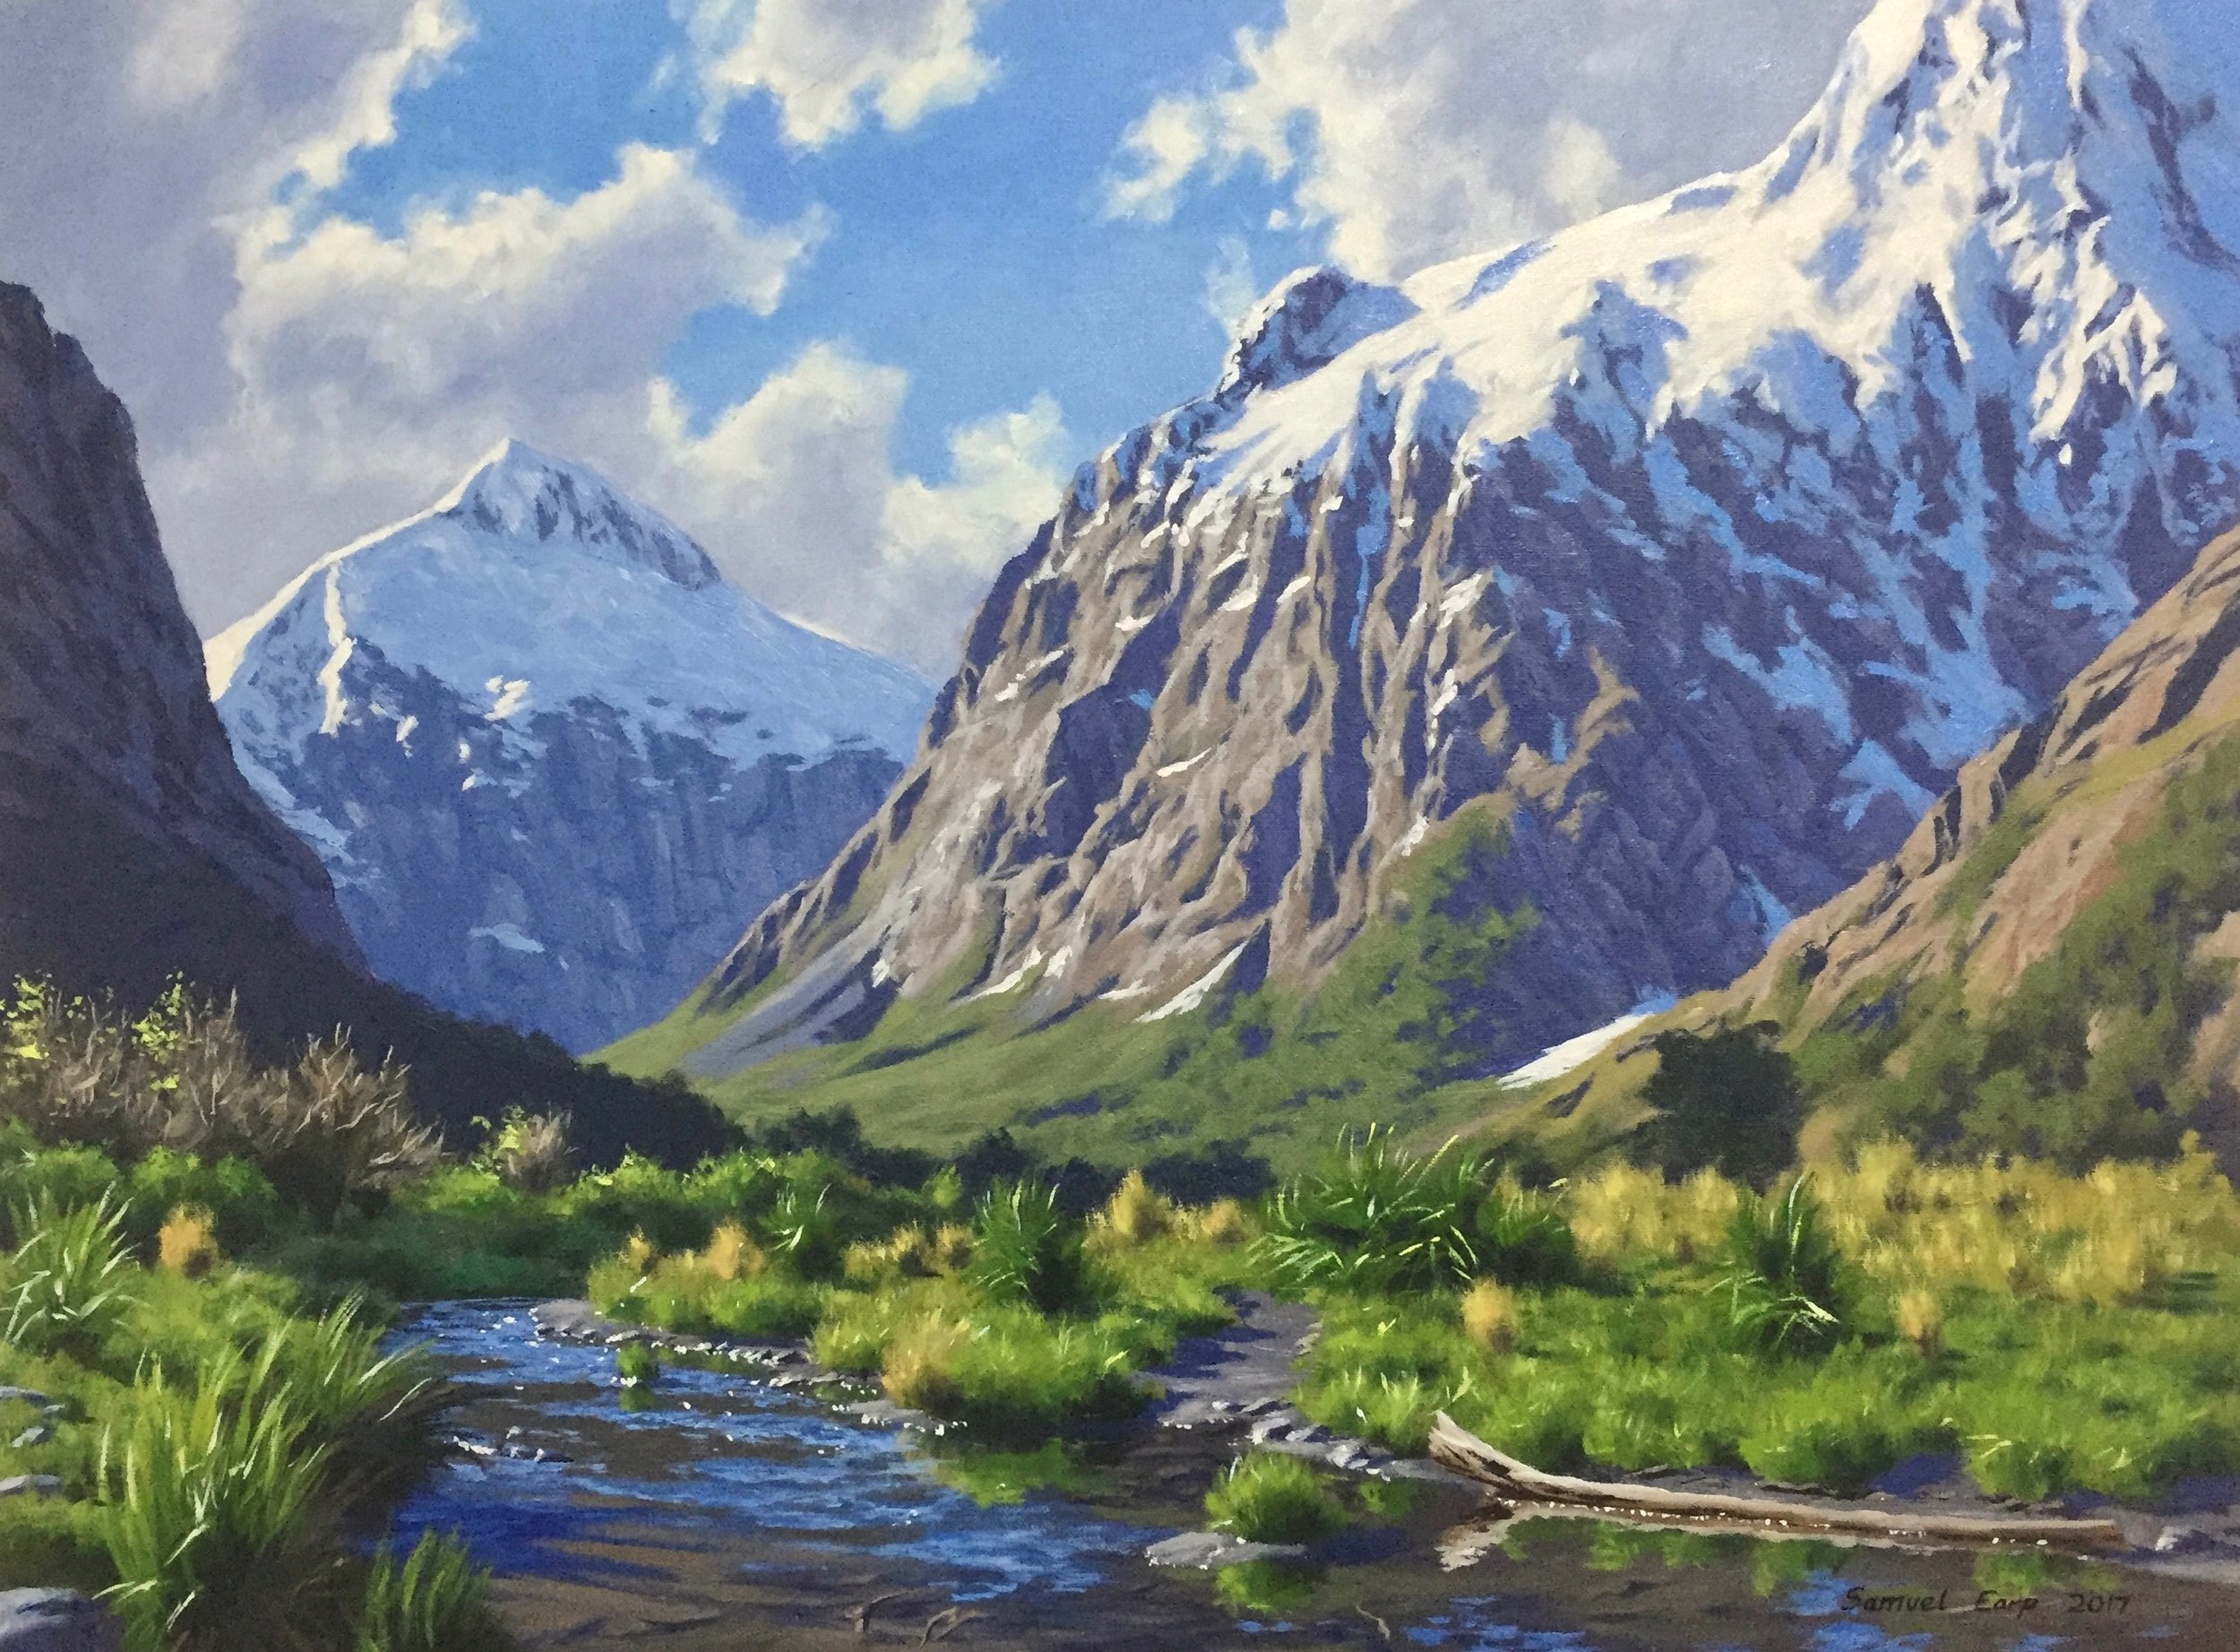 How To Paint Mountains Mt Talbot New Zealand Samuel Earp Artist